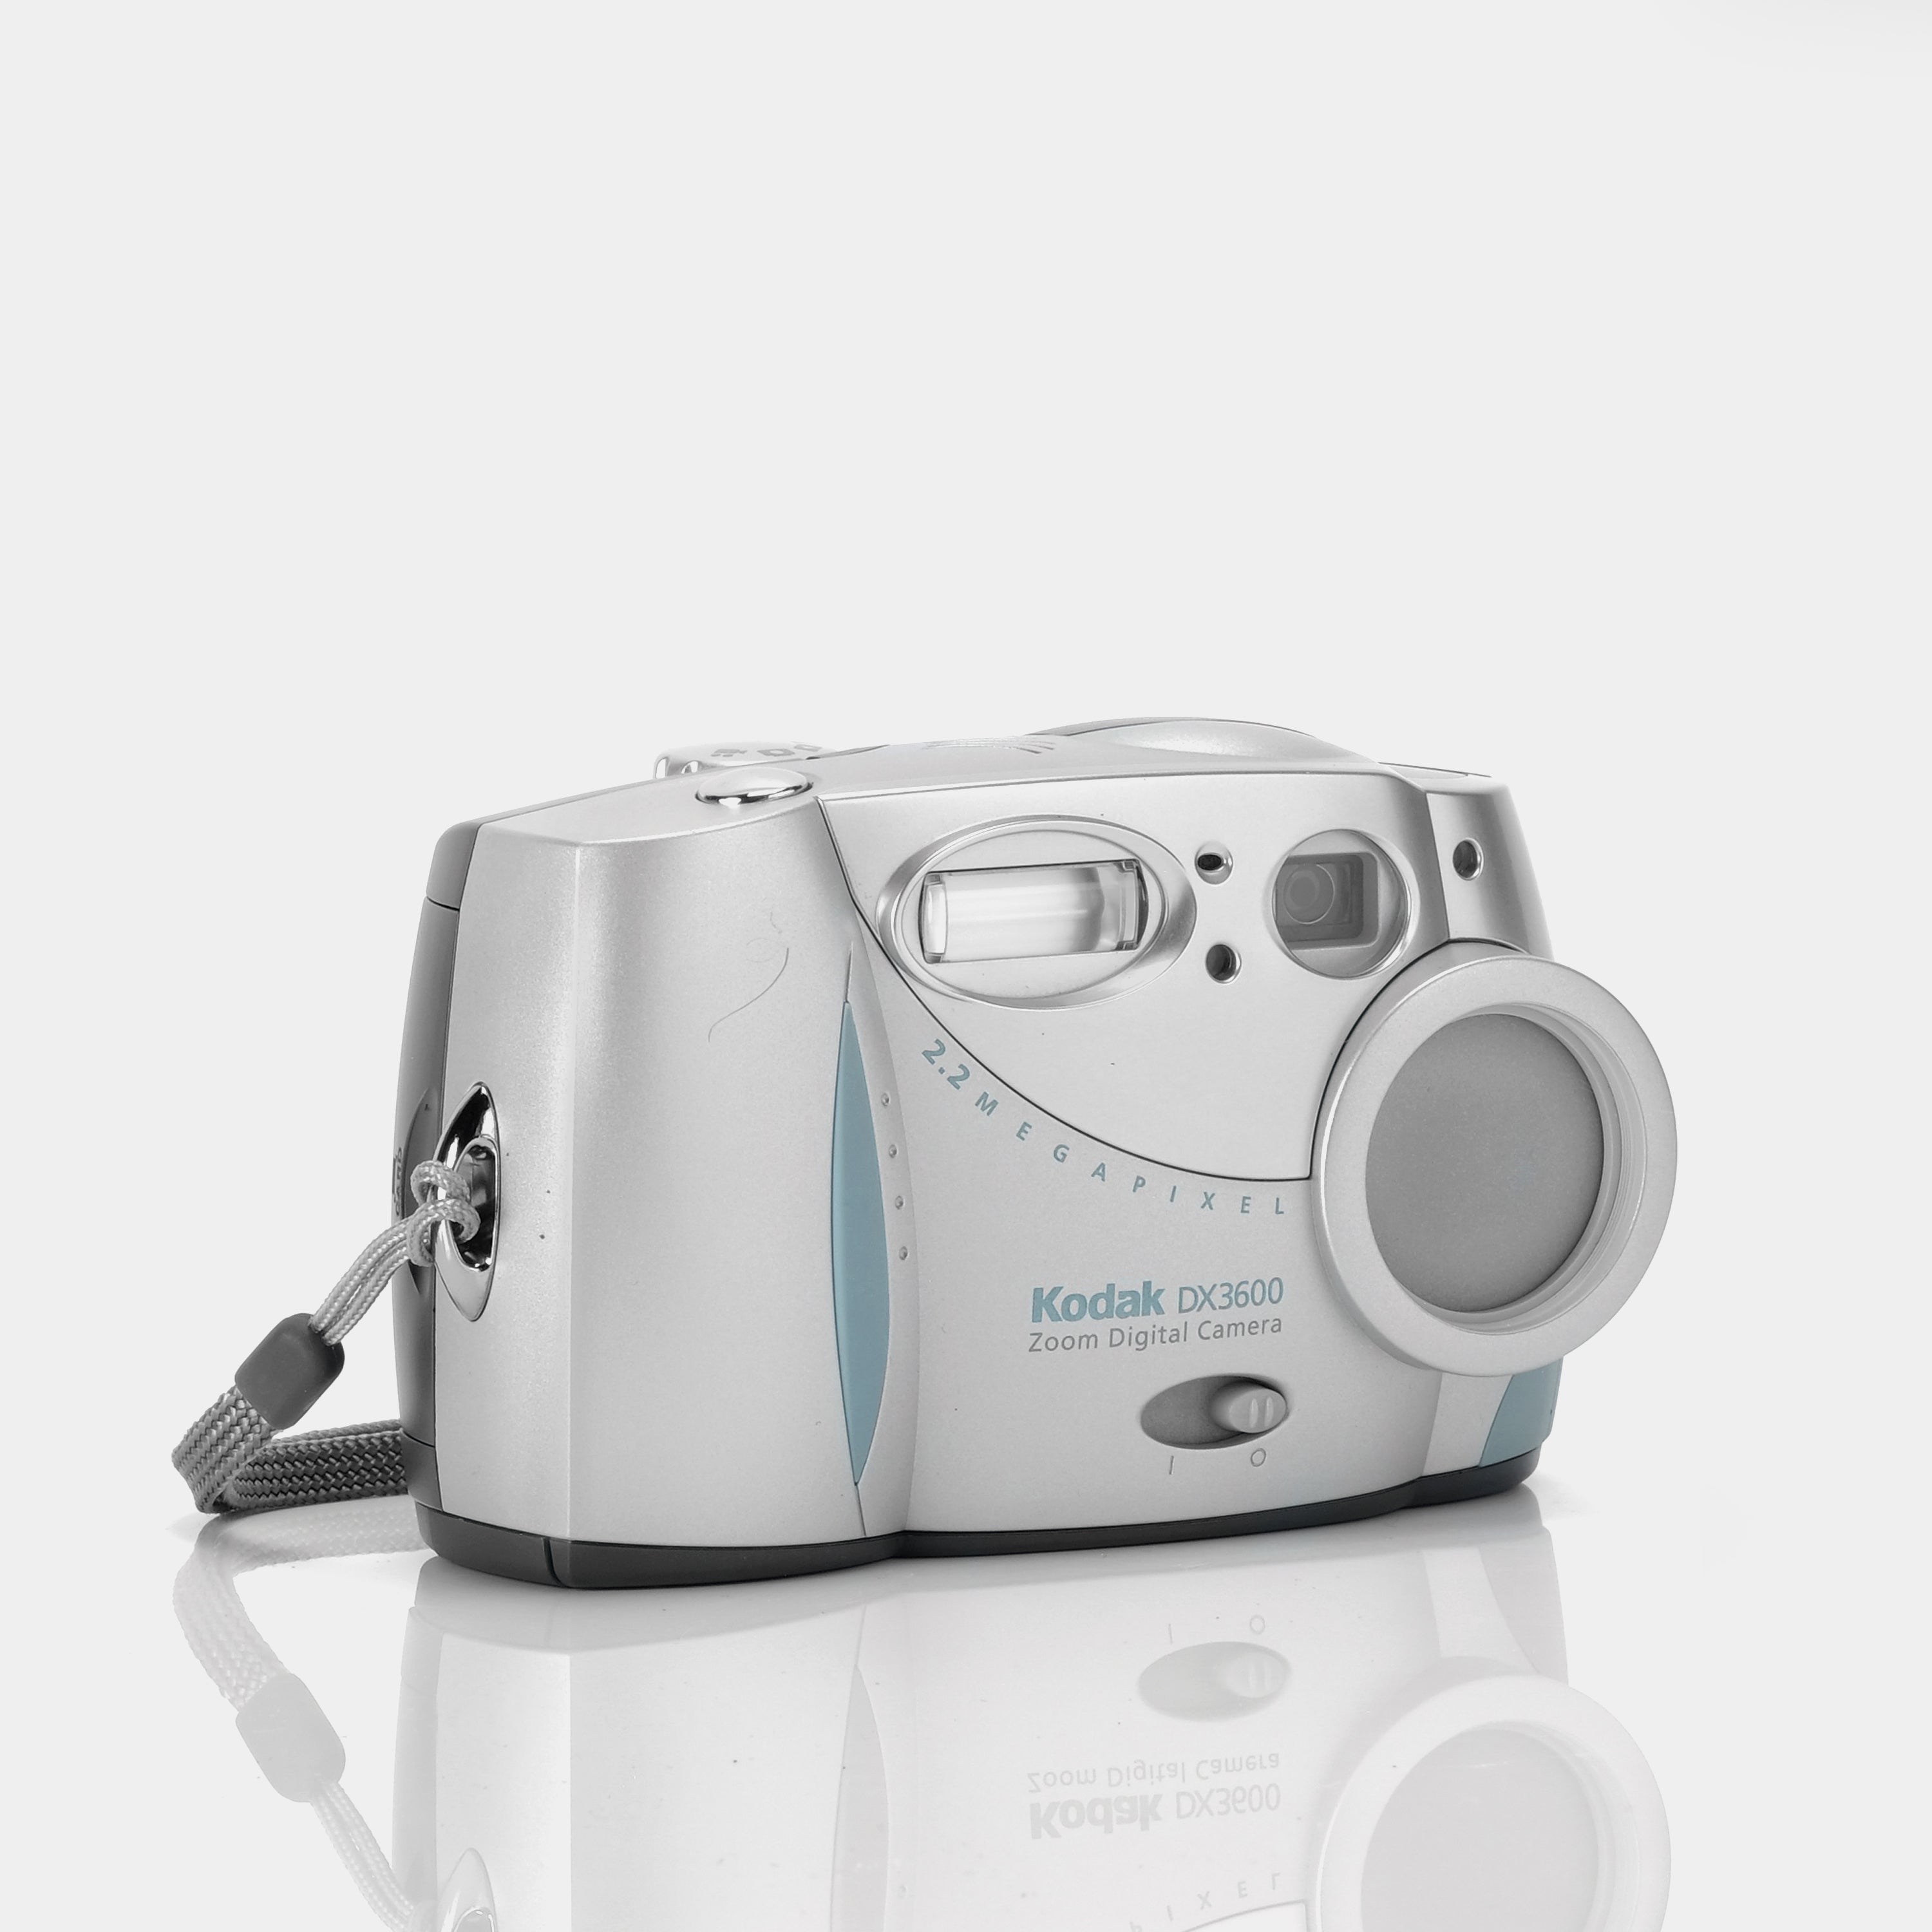 Kodak DX3600 Zoom Point and Shoot Digital Camera